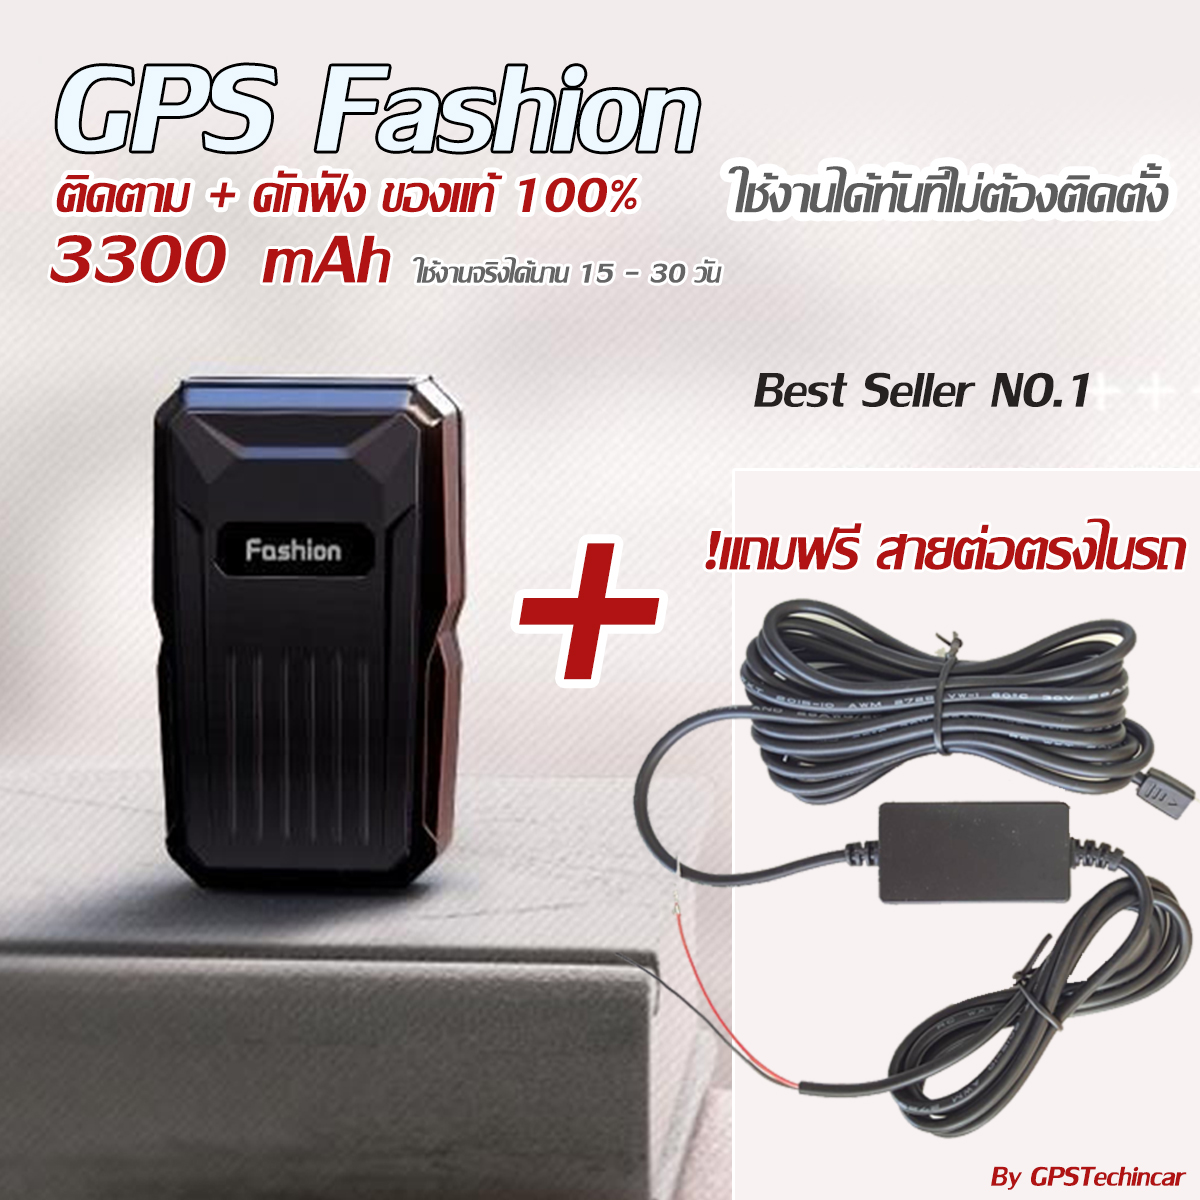 Fashion-GPS-003 •GPSTechincar GPSติดตามรถ GPSนำทาง กล้องติดรถยนต์ รุ่นใหม่ล่าสุด ราคาถูก จัดส่งทั่วไทย